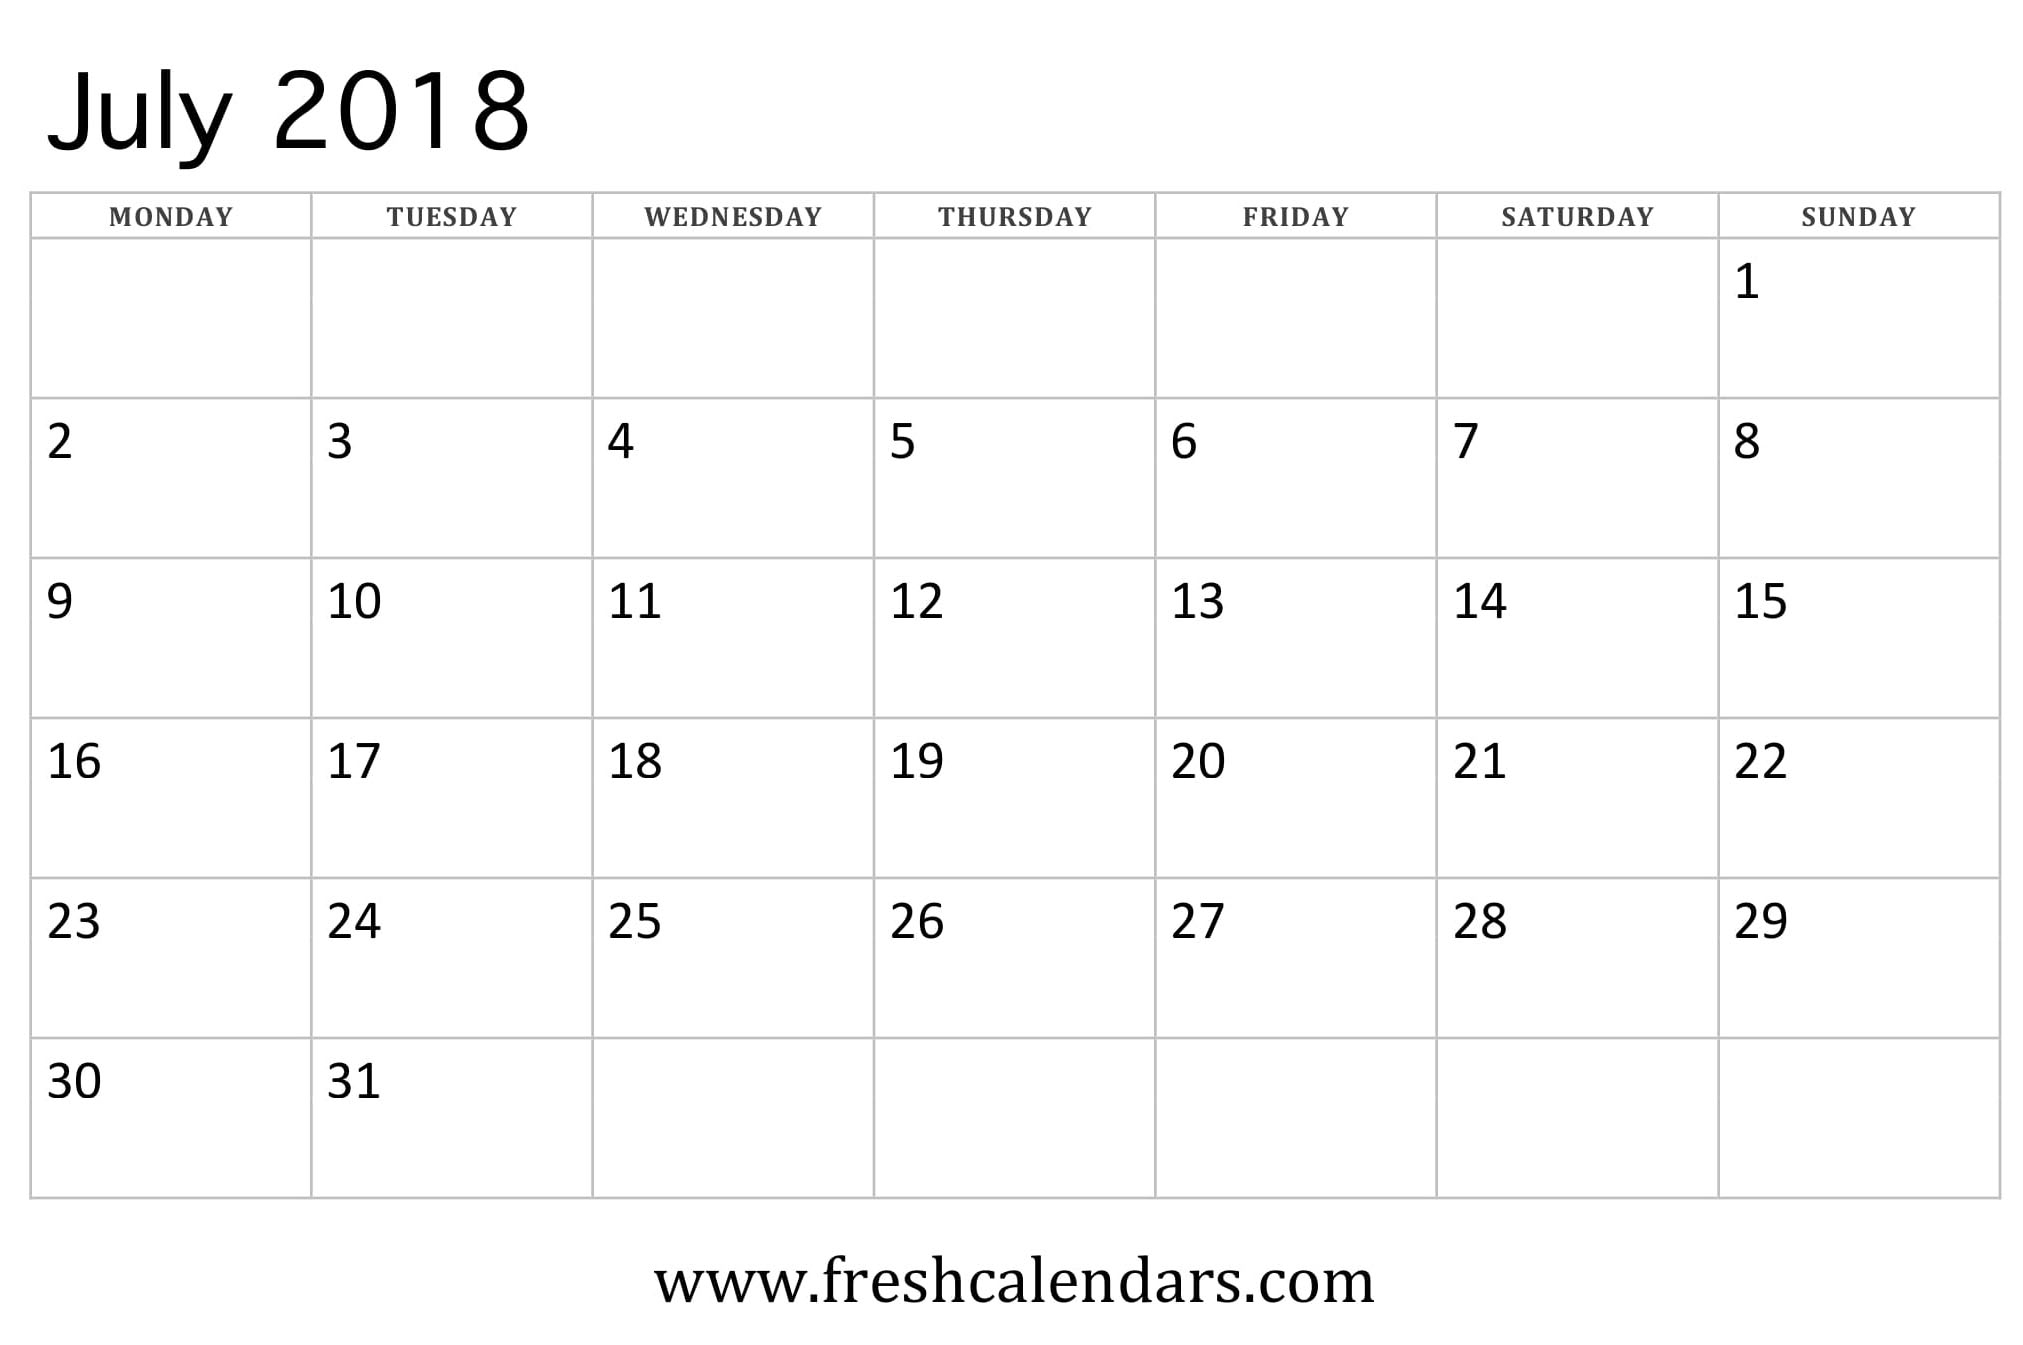 July 2018 Calendar Printable - Fresh Calendars